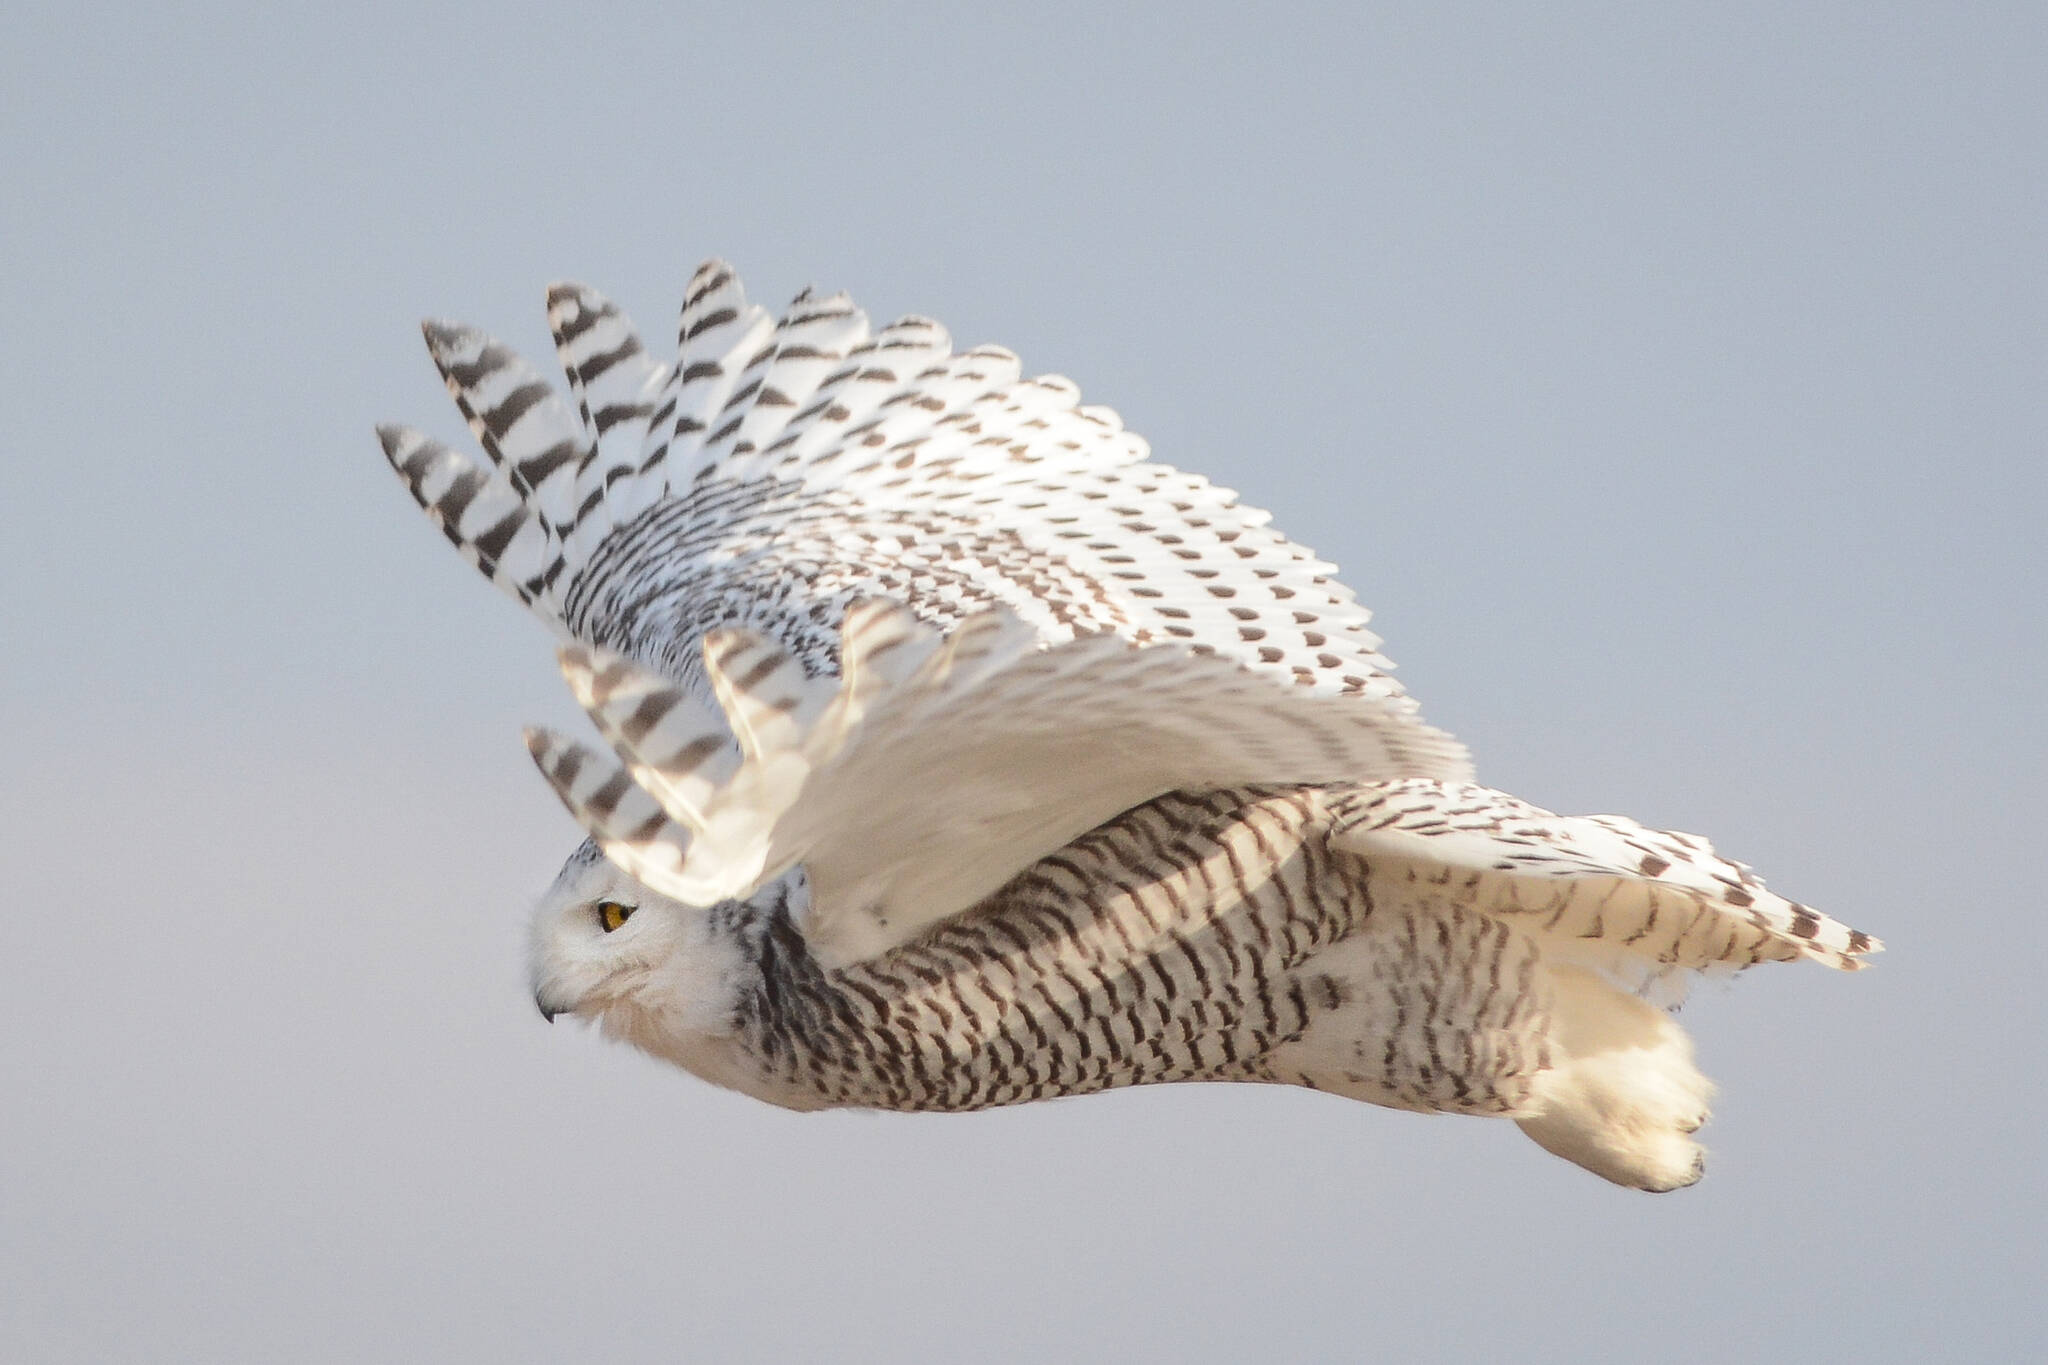 Snowy owls are Toronto's latest wildlife sensation